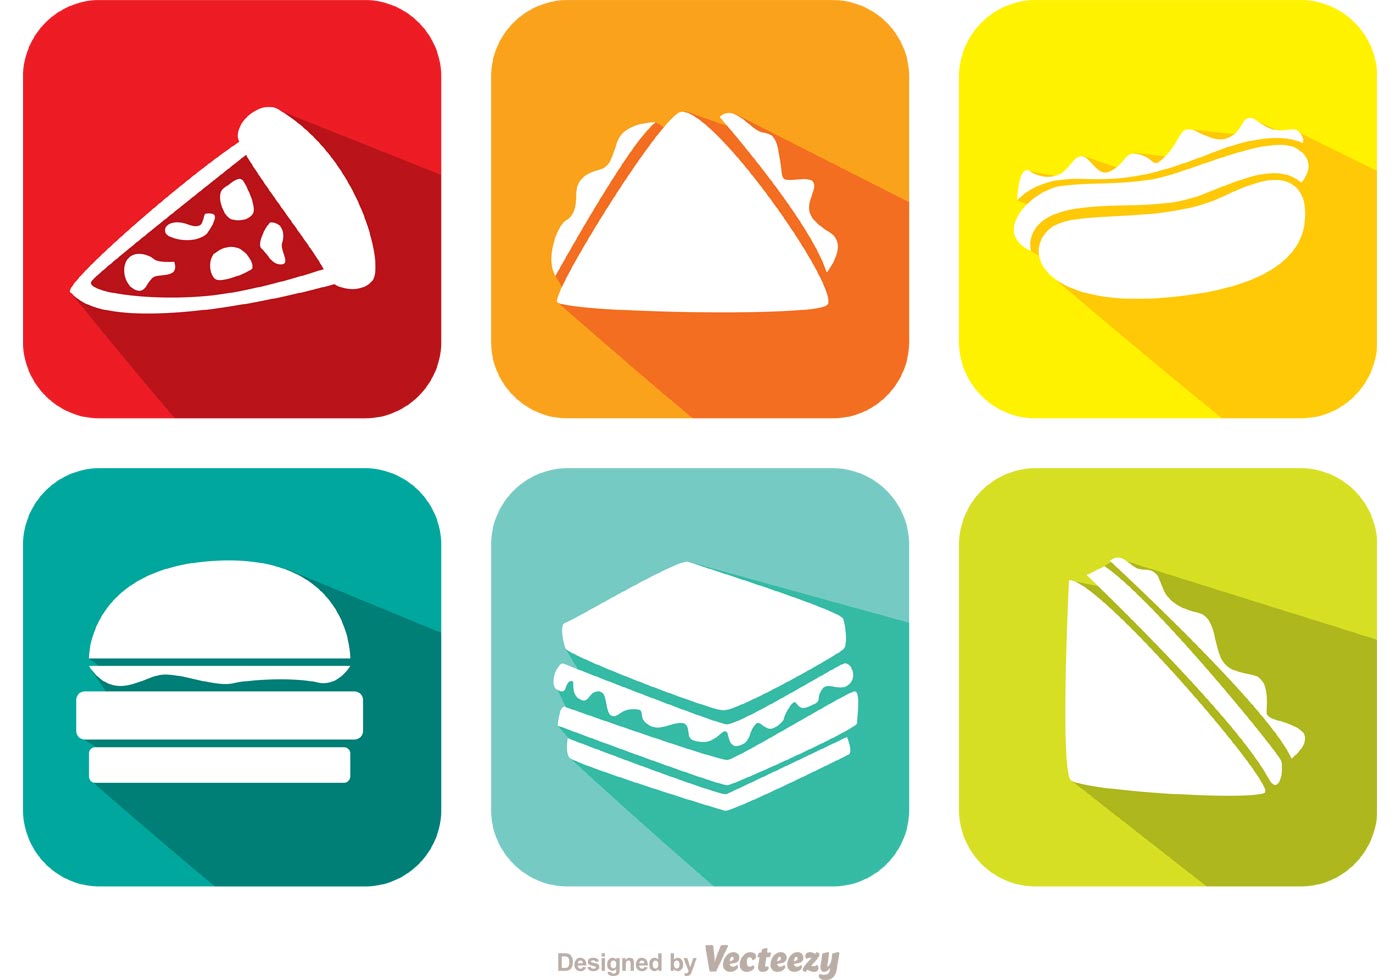 Bright Food Vector Icons - Download Free Vectors, Clipart ...